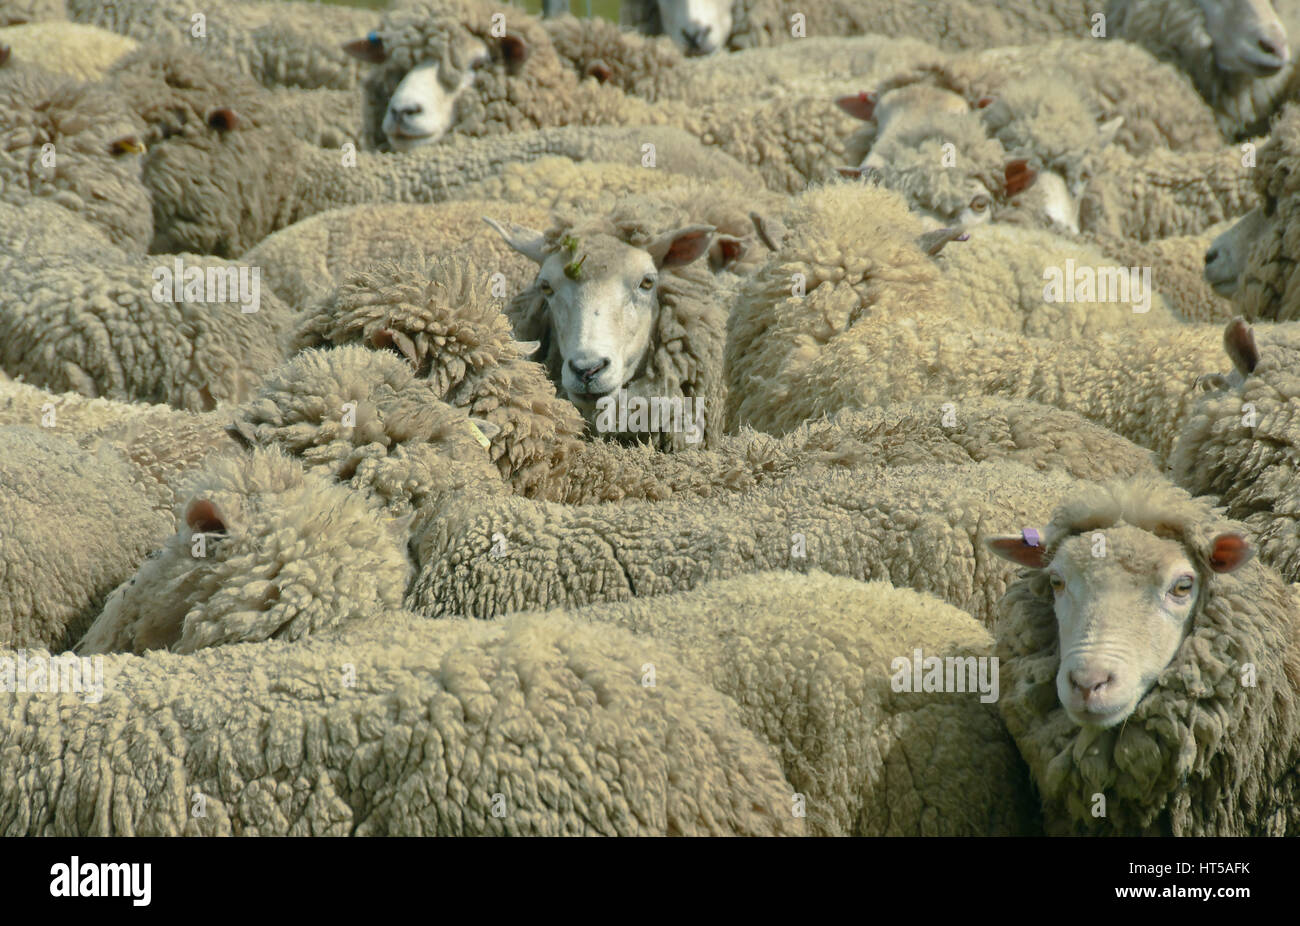 Sheep waiting for shearing, Falkland islands Stock Photo